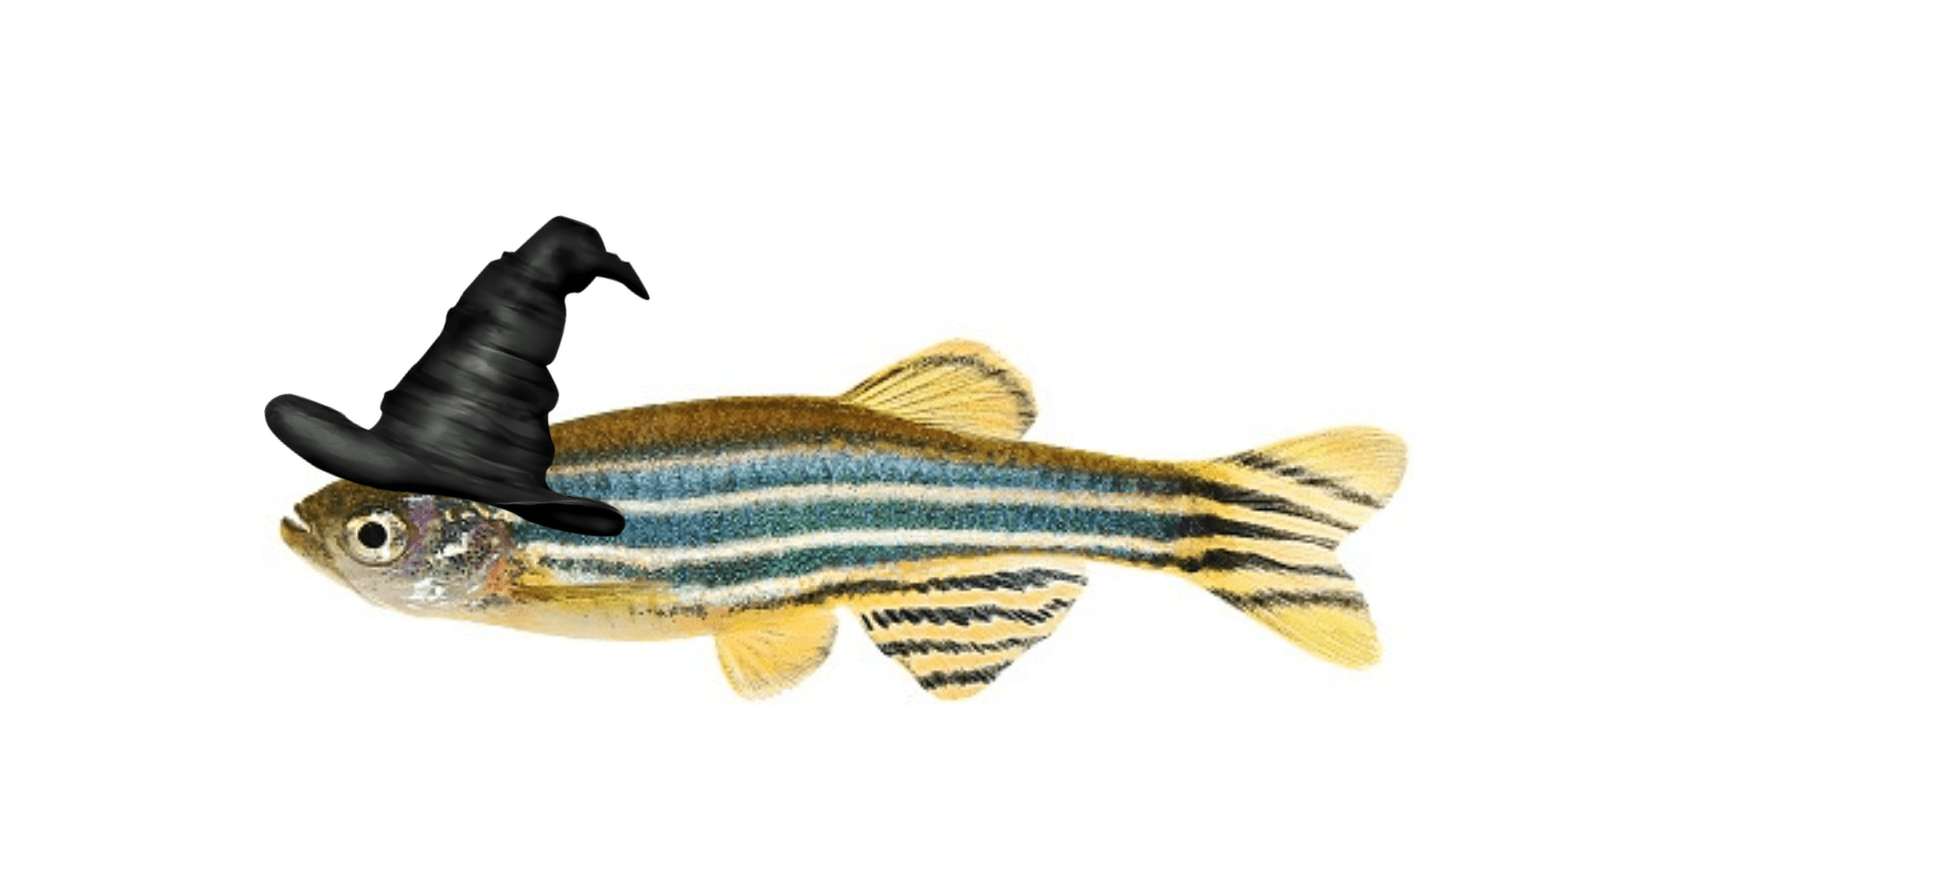 Caudal fin regeneration in zebrafish